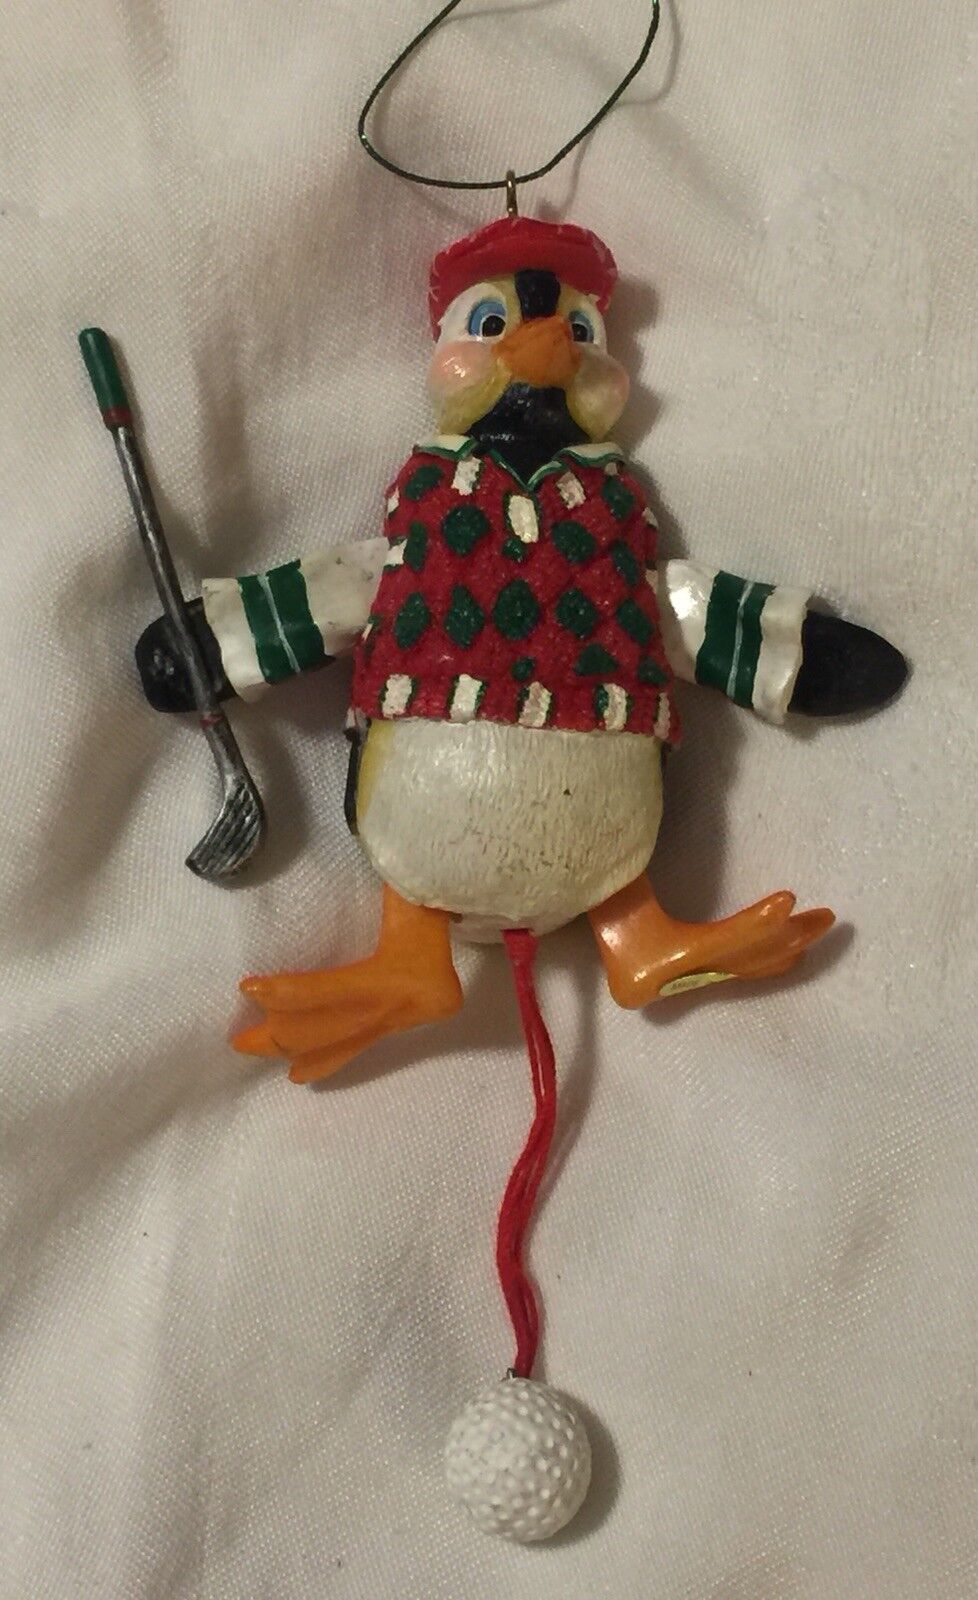 Snowman Golfer Pull-String Christmas Ornament Club Ball Holiday Tree Decor Gift